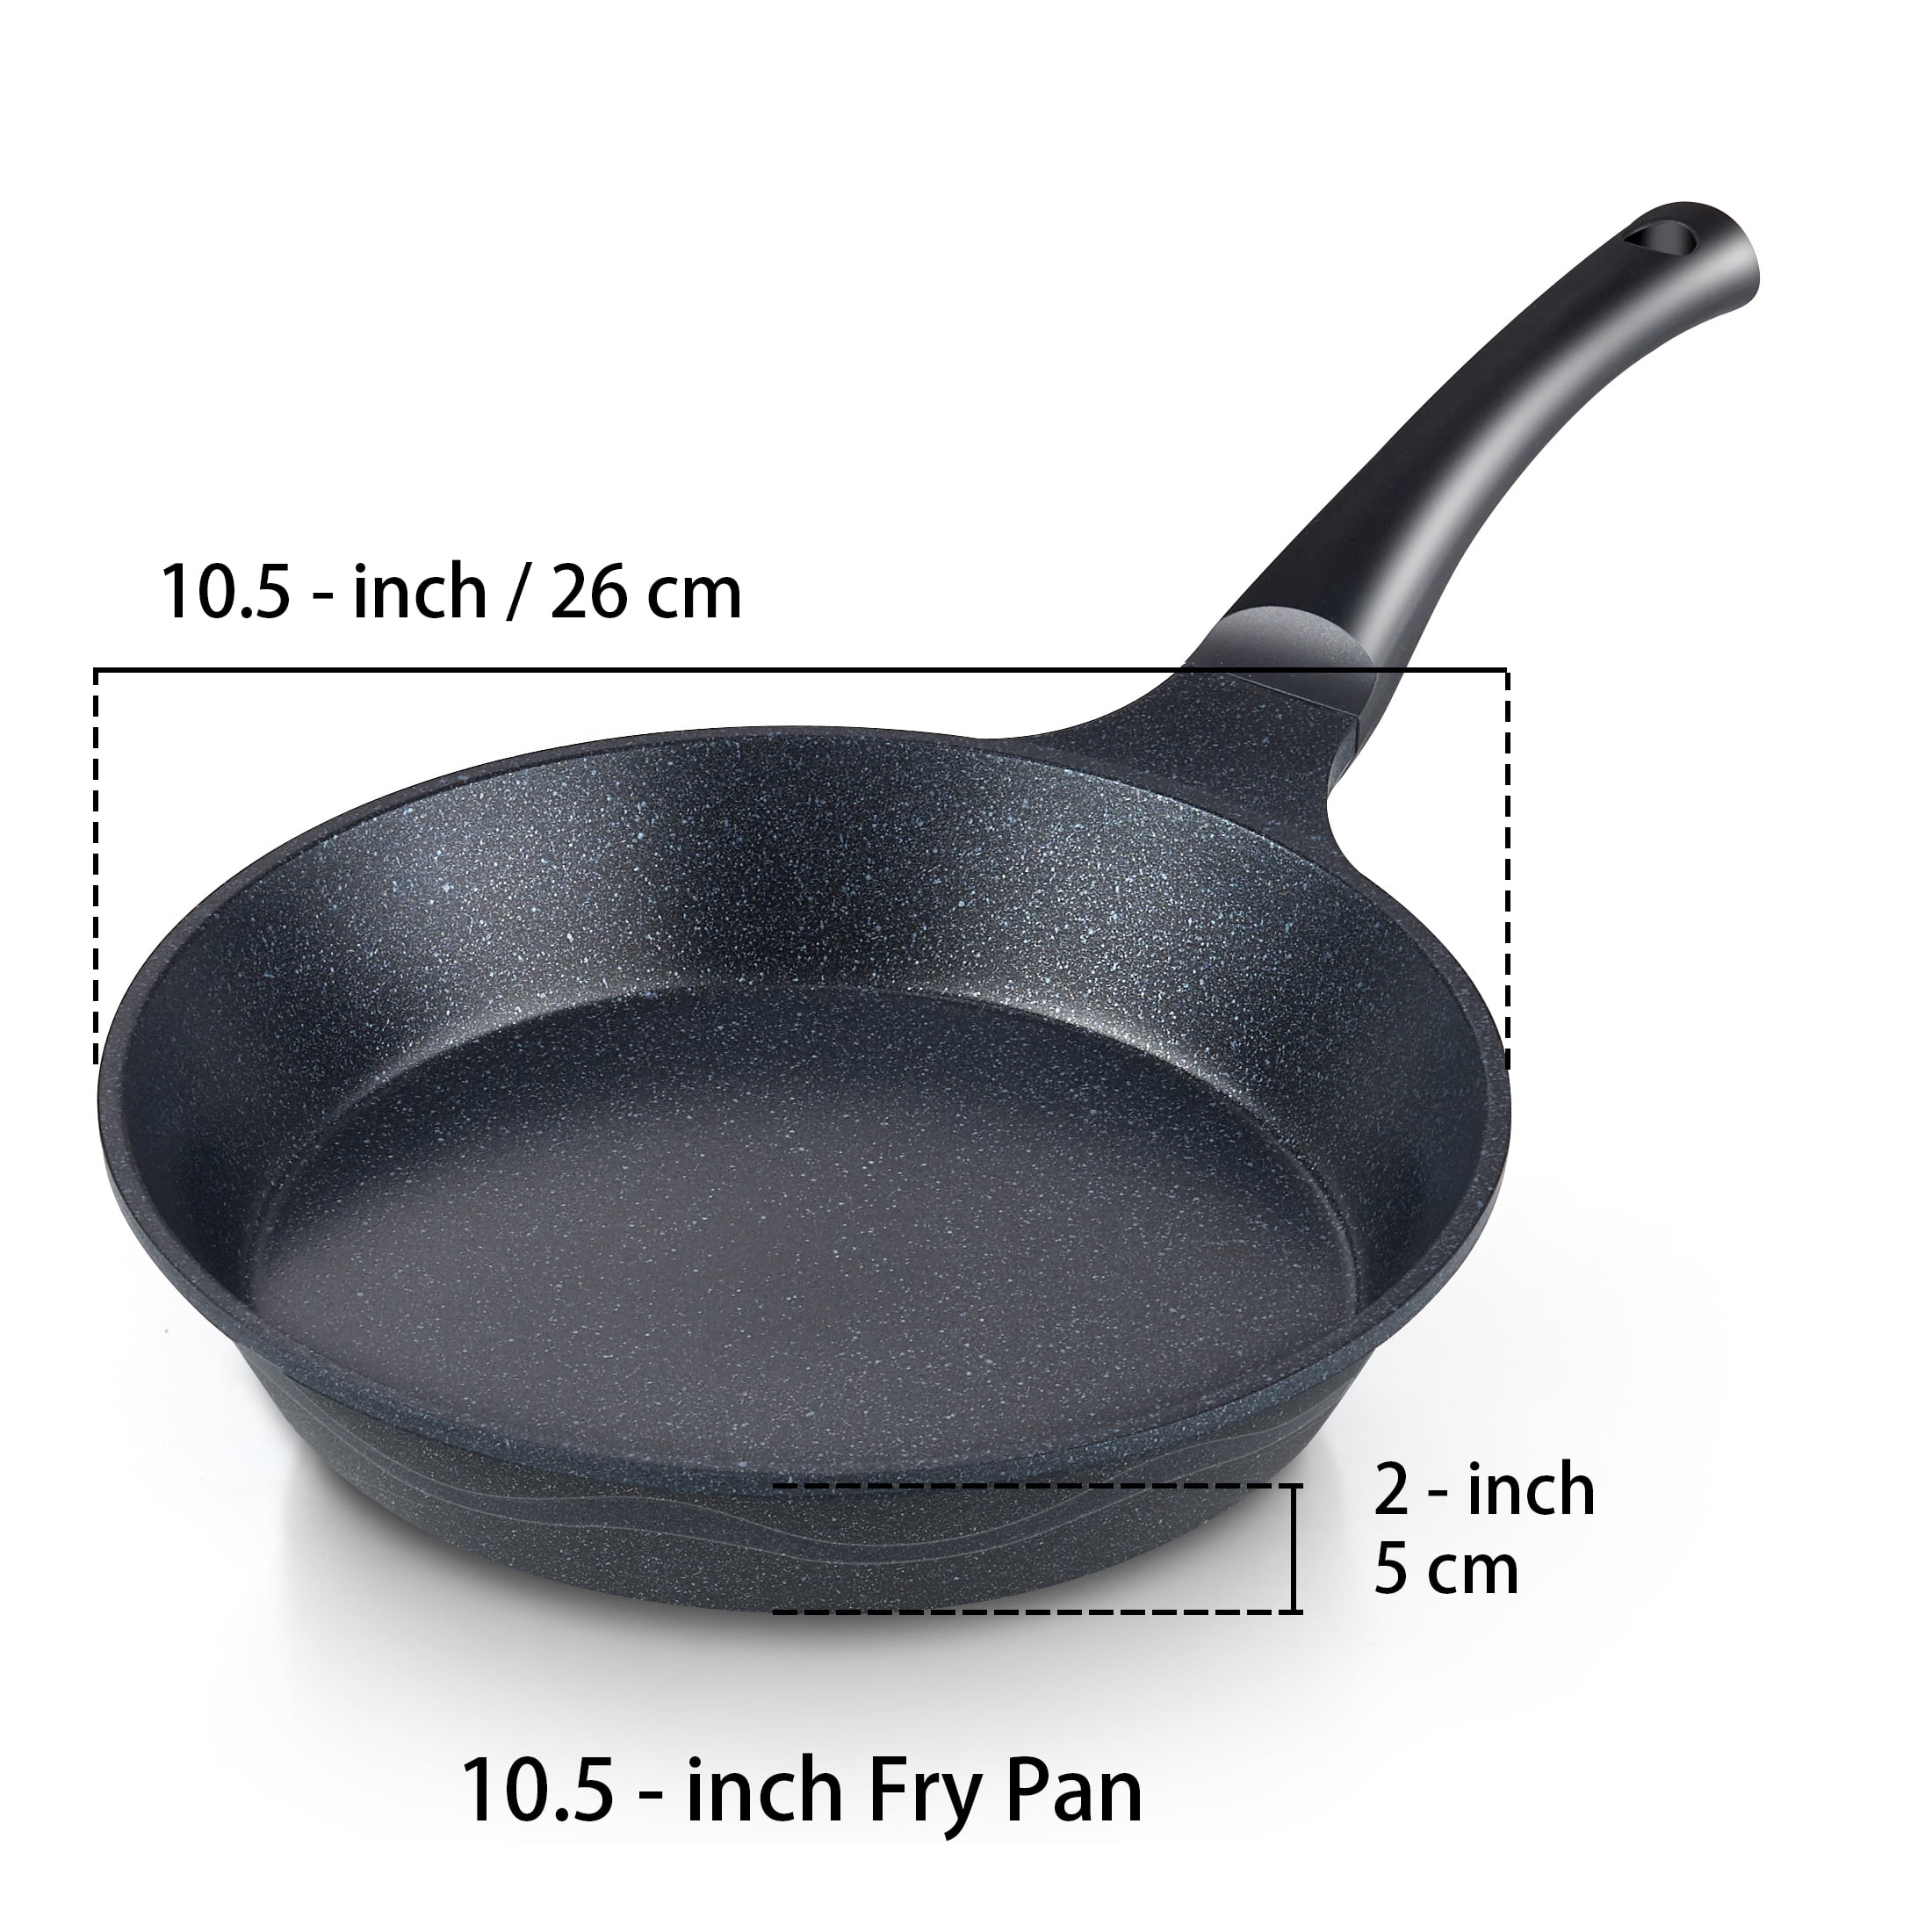 Cook N Home 02691 Ceramic Nonstick Coating Saute Fry Pan 12-Inch 30cm, Grey